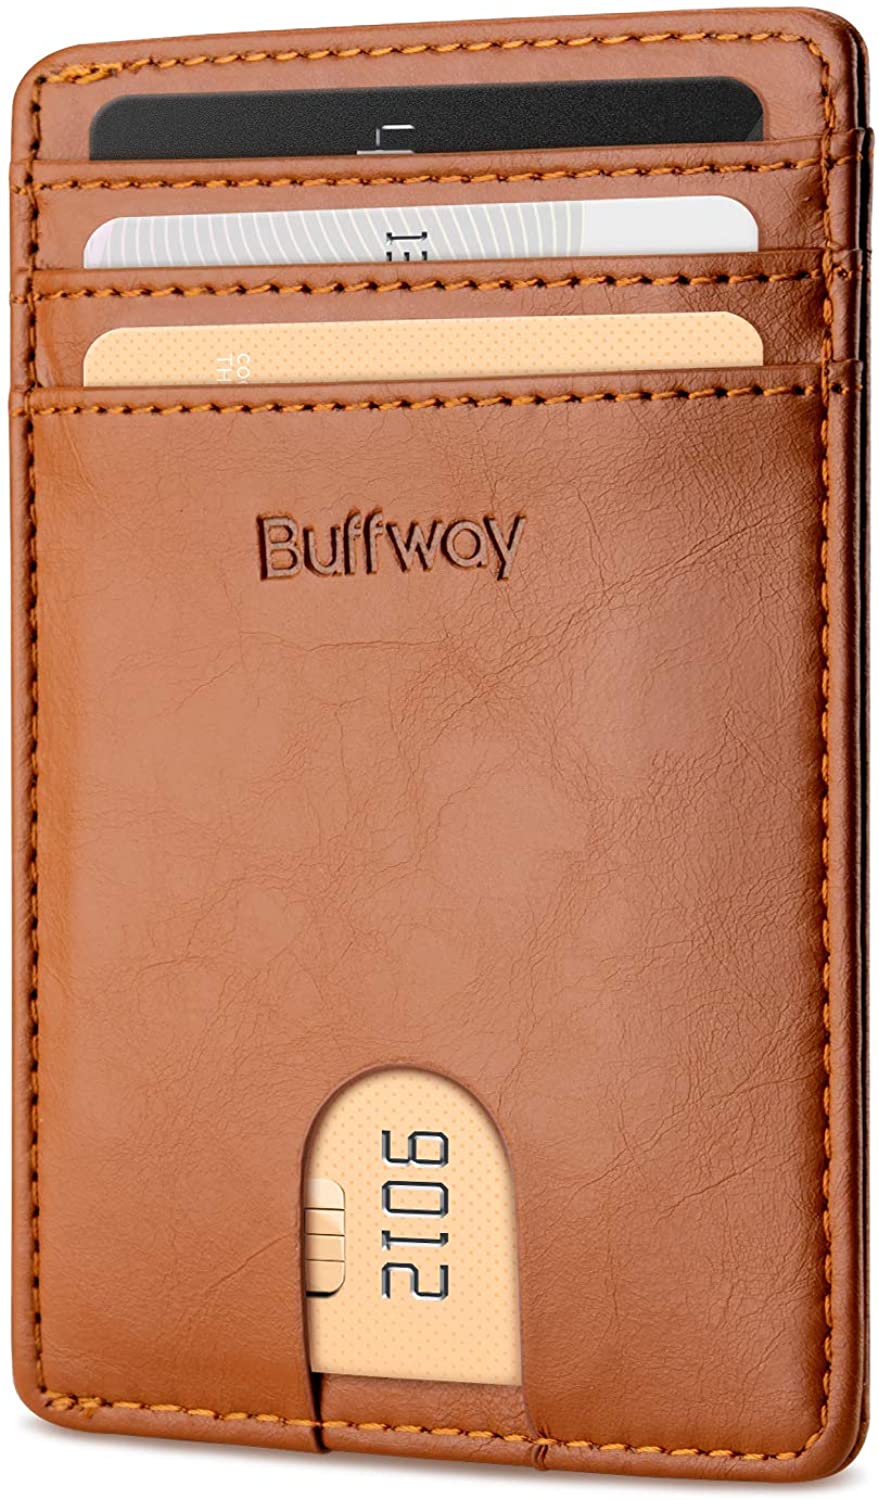 Buffway Slim Minimalist Front Pocket RFID Blocking Leather Wallets for Men Women 